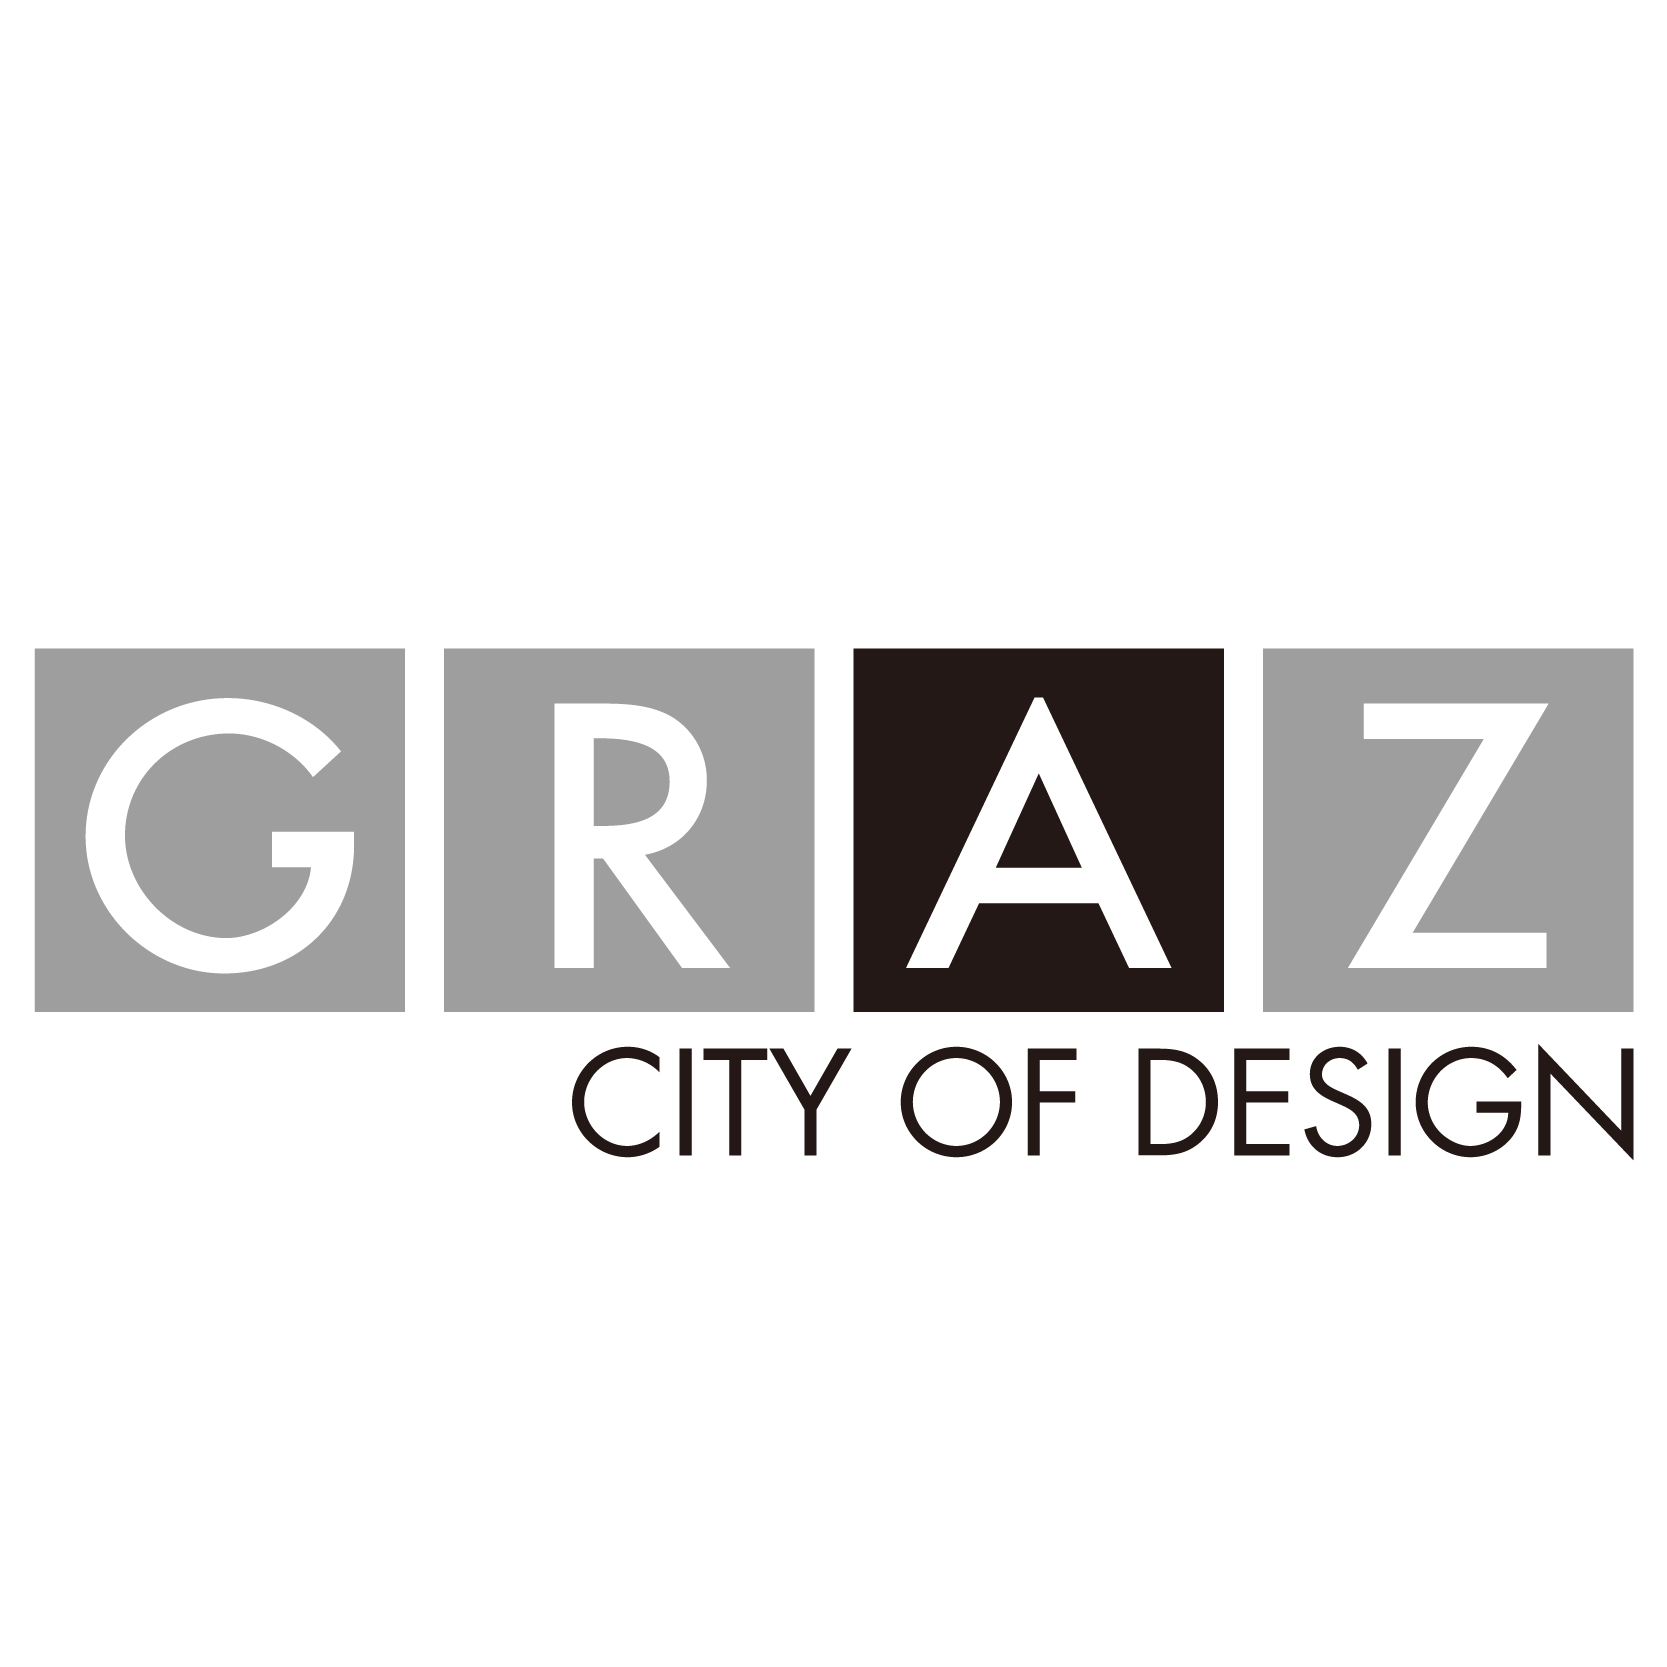 Graz, City of Design